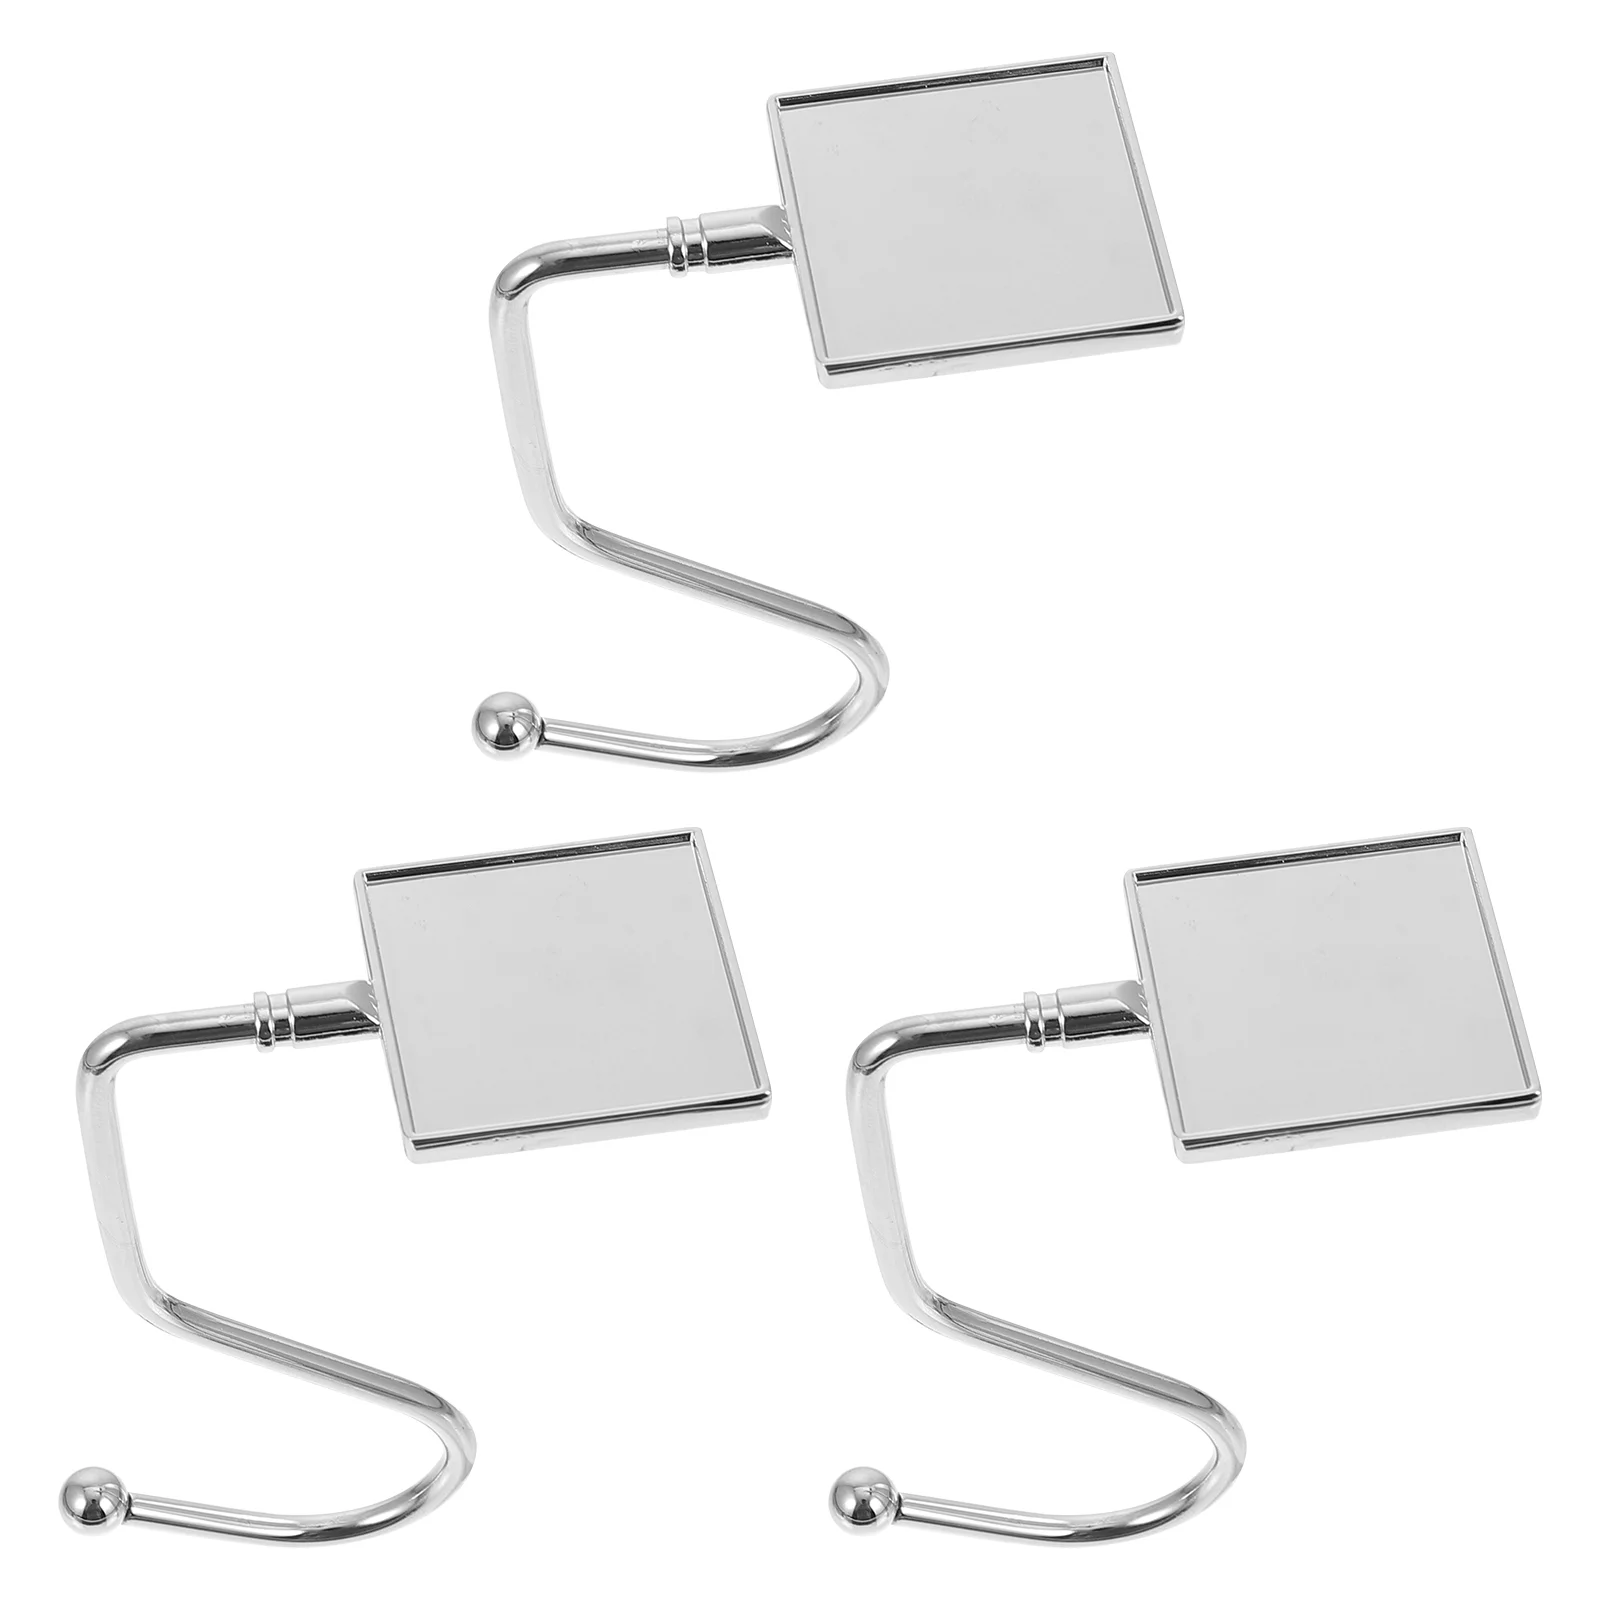 

Hook Hooks Hanging S Purse Handbag Deskhangeriron Holder Storage Tableheavy Duty Type Office Supplies Moving Desktop Shaped